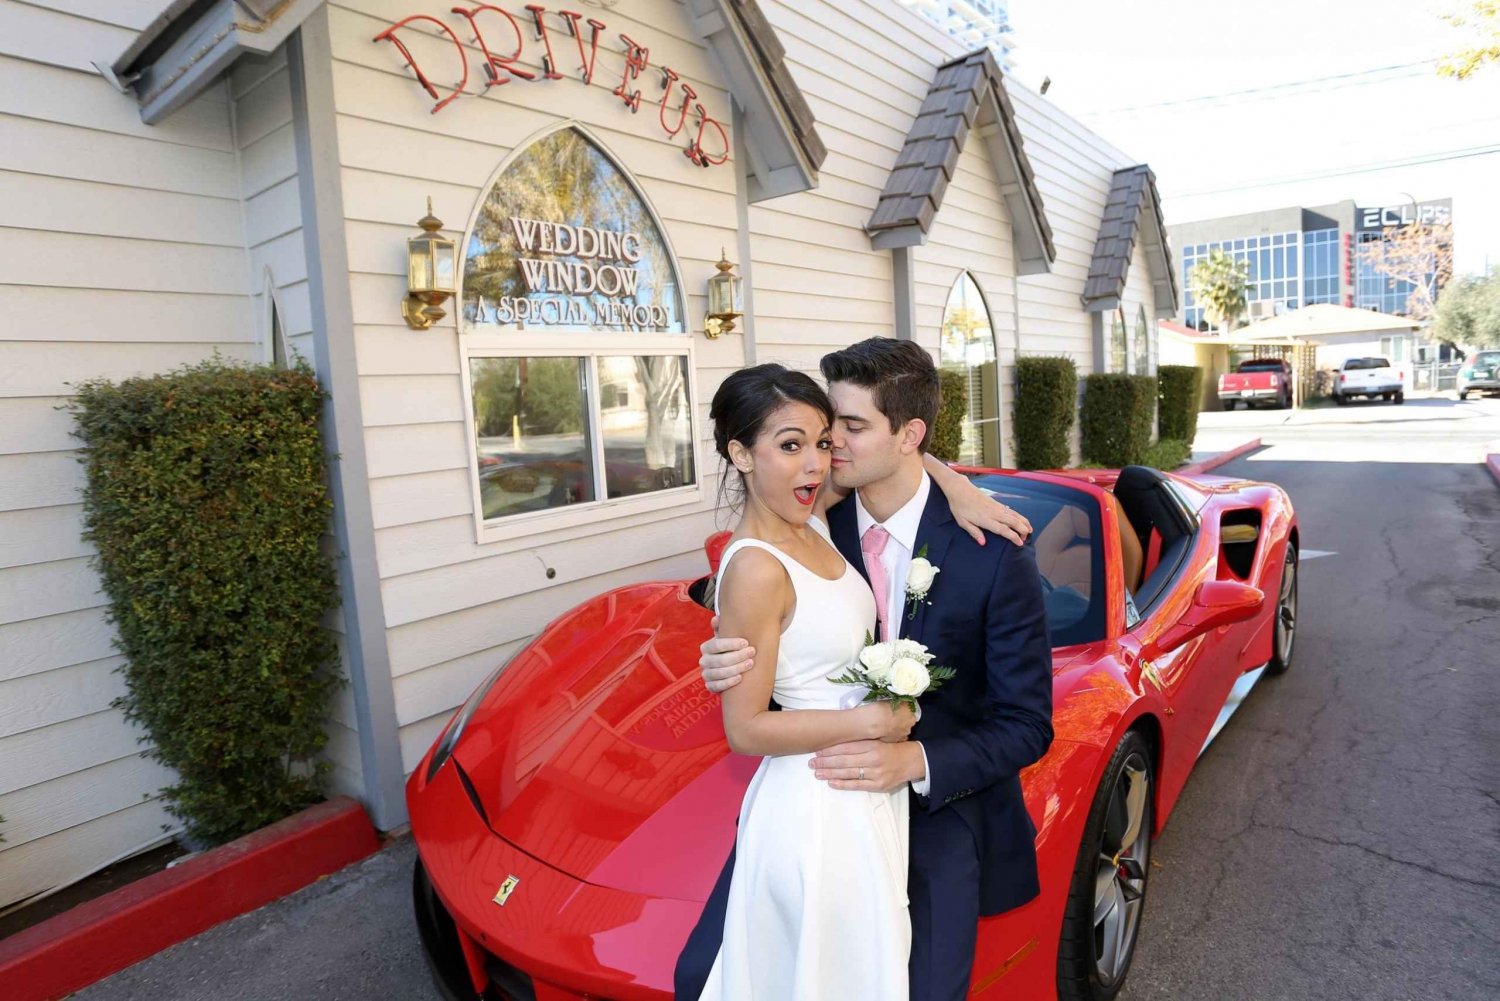 Heiraten in Las Vegas: Weltberühmte Drive-Up-Hochzeit